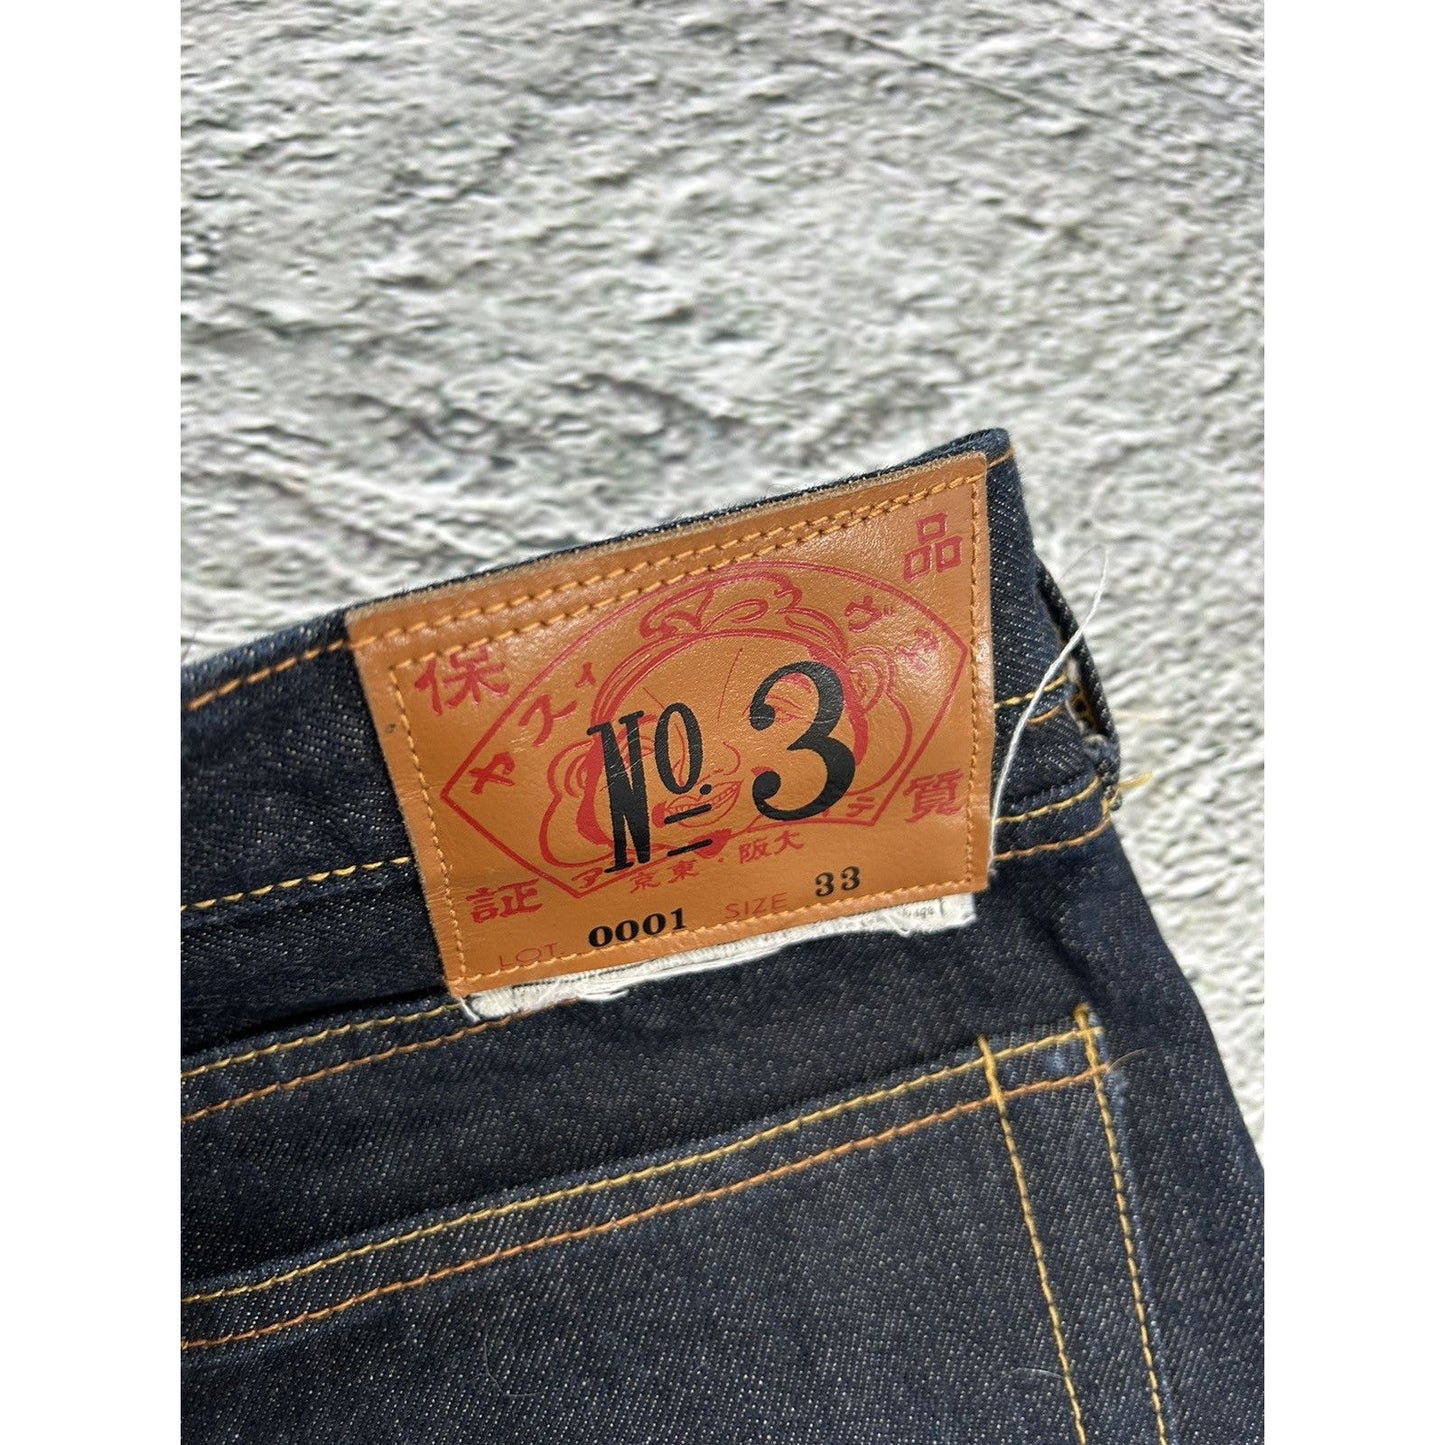 Evisu daicock big logo jeans khaki selvedge denim navy